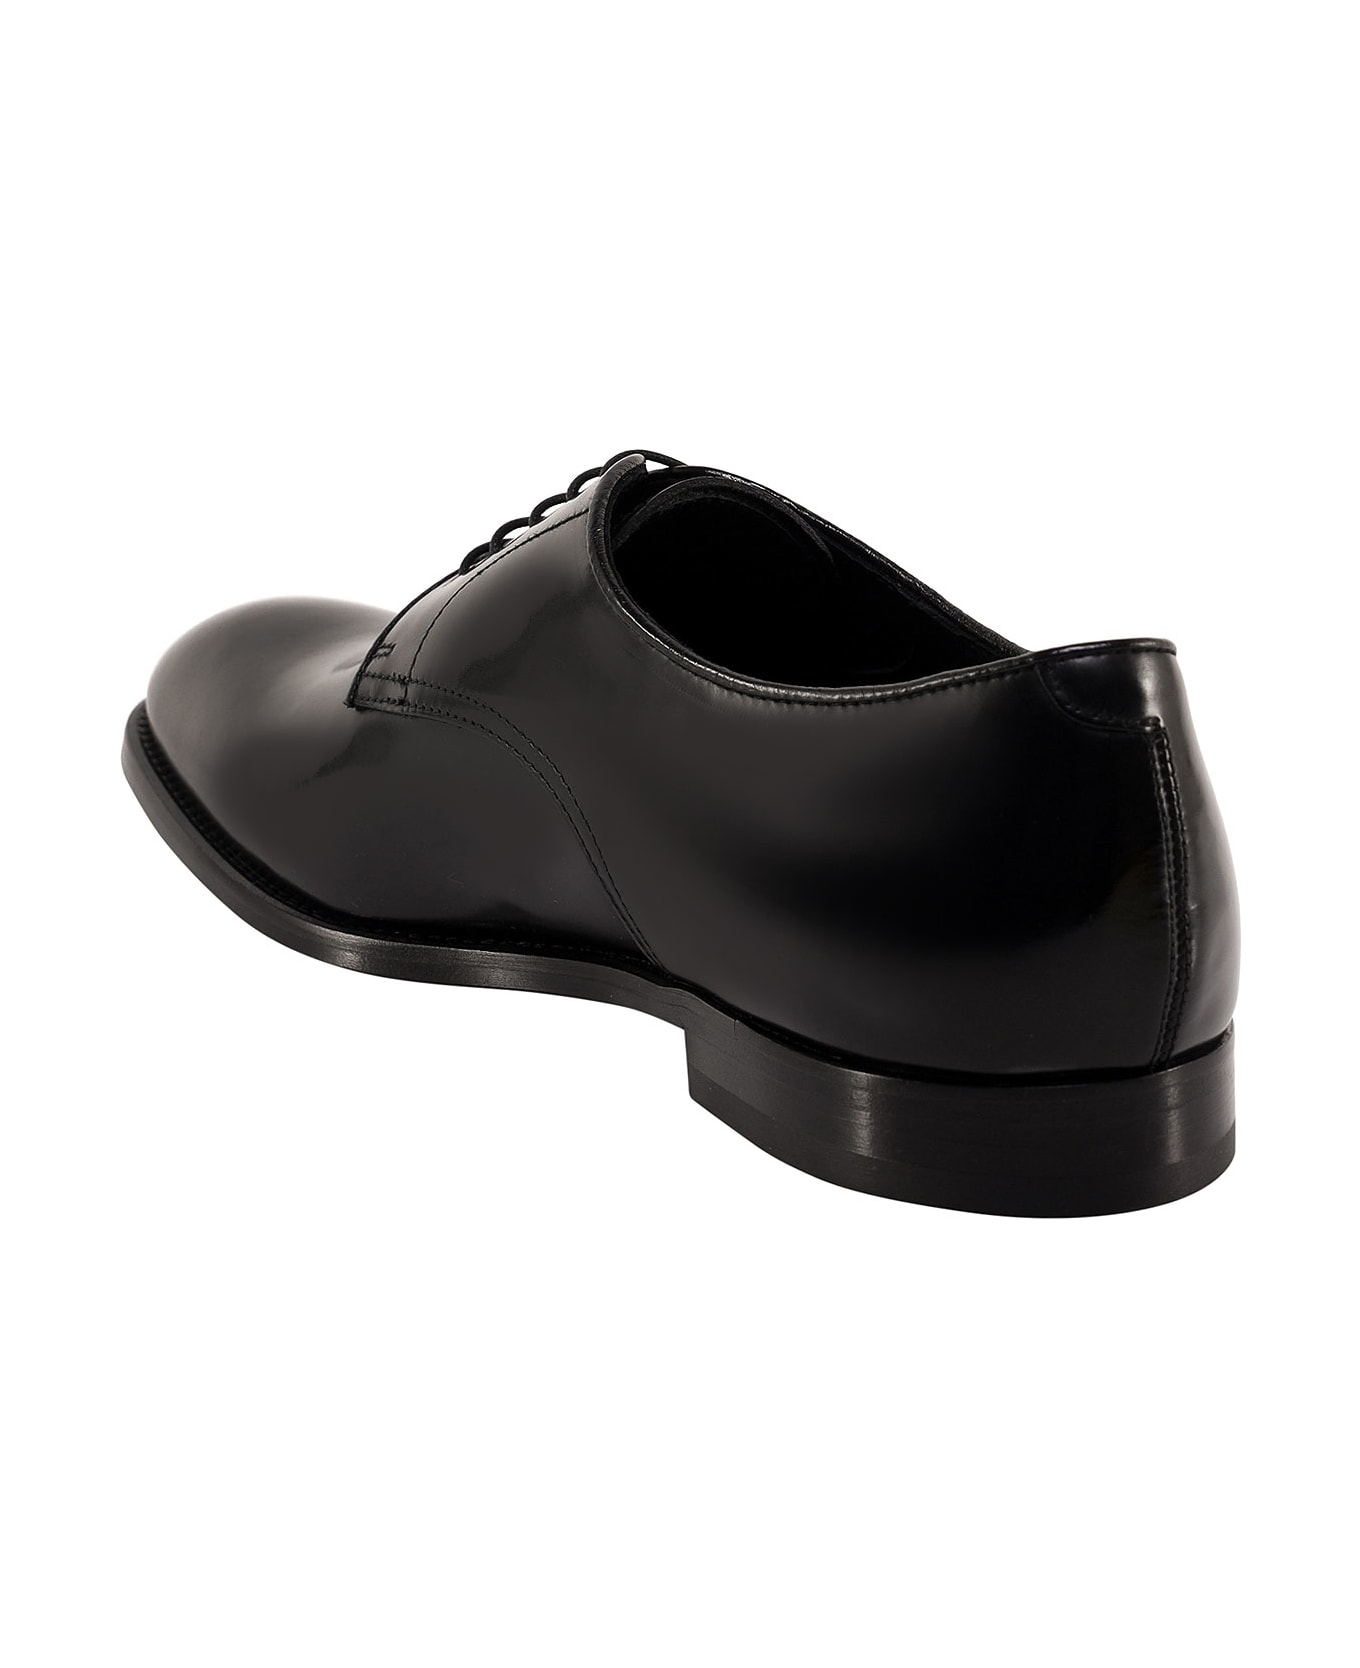 Doucal's Derby Shoes - Black